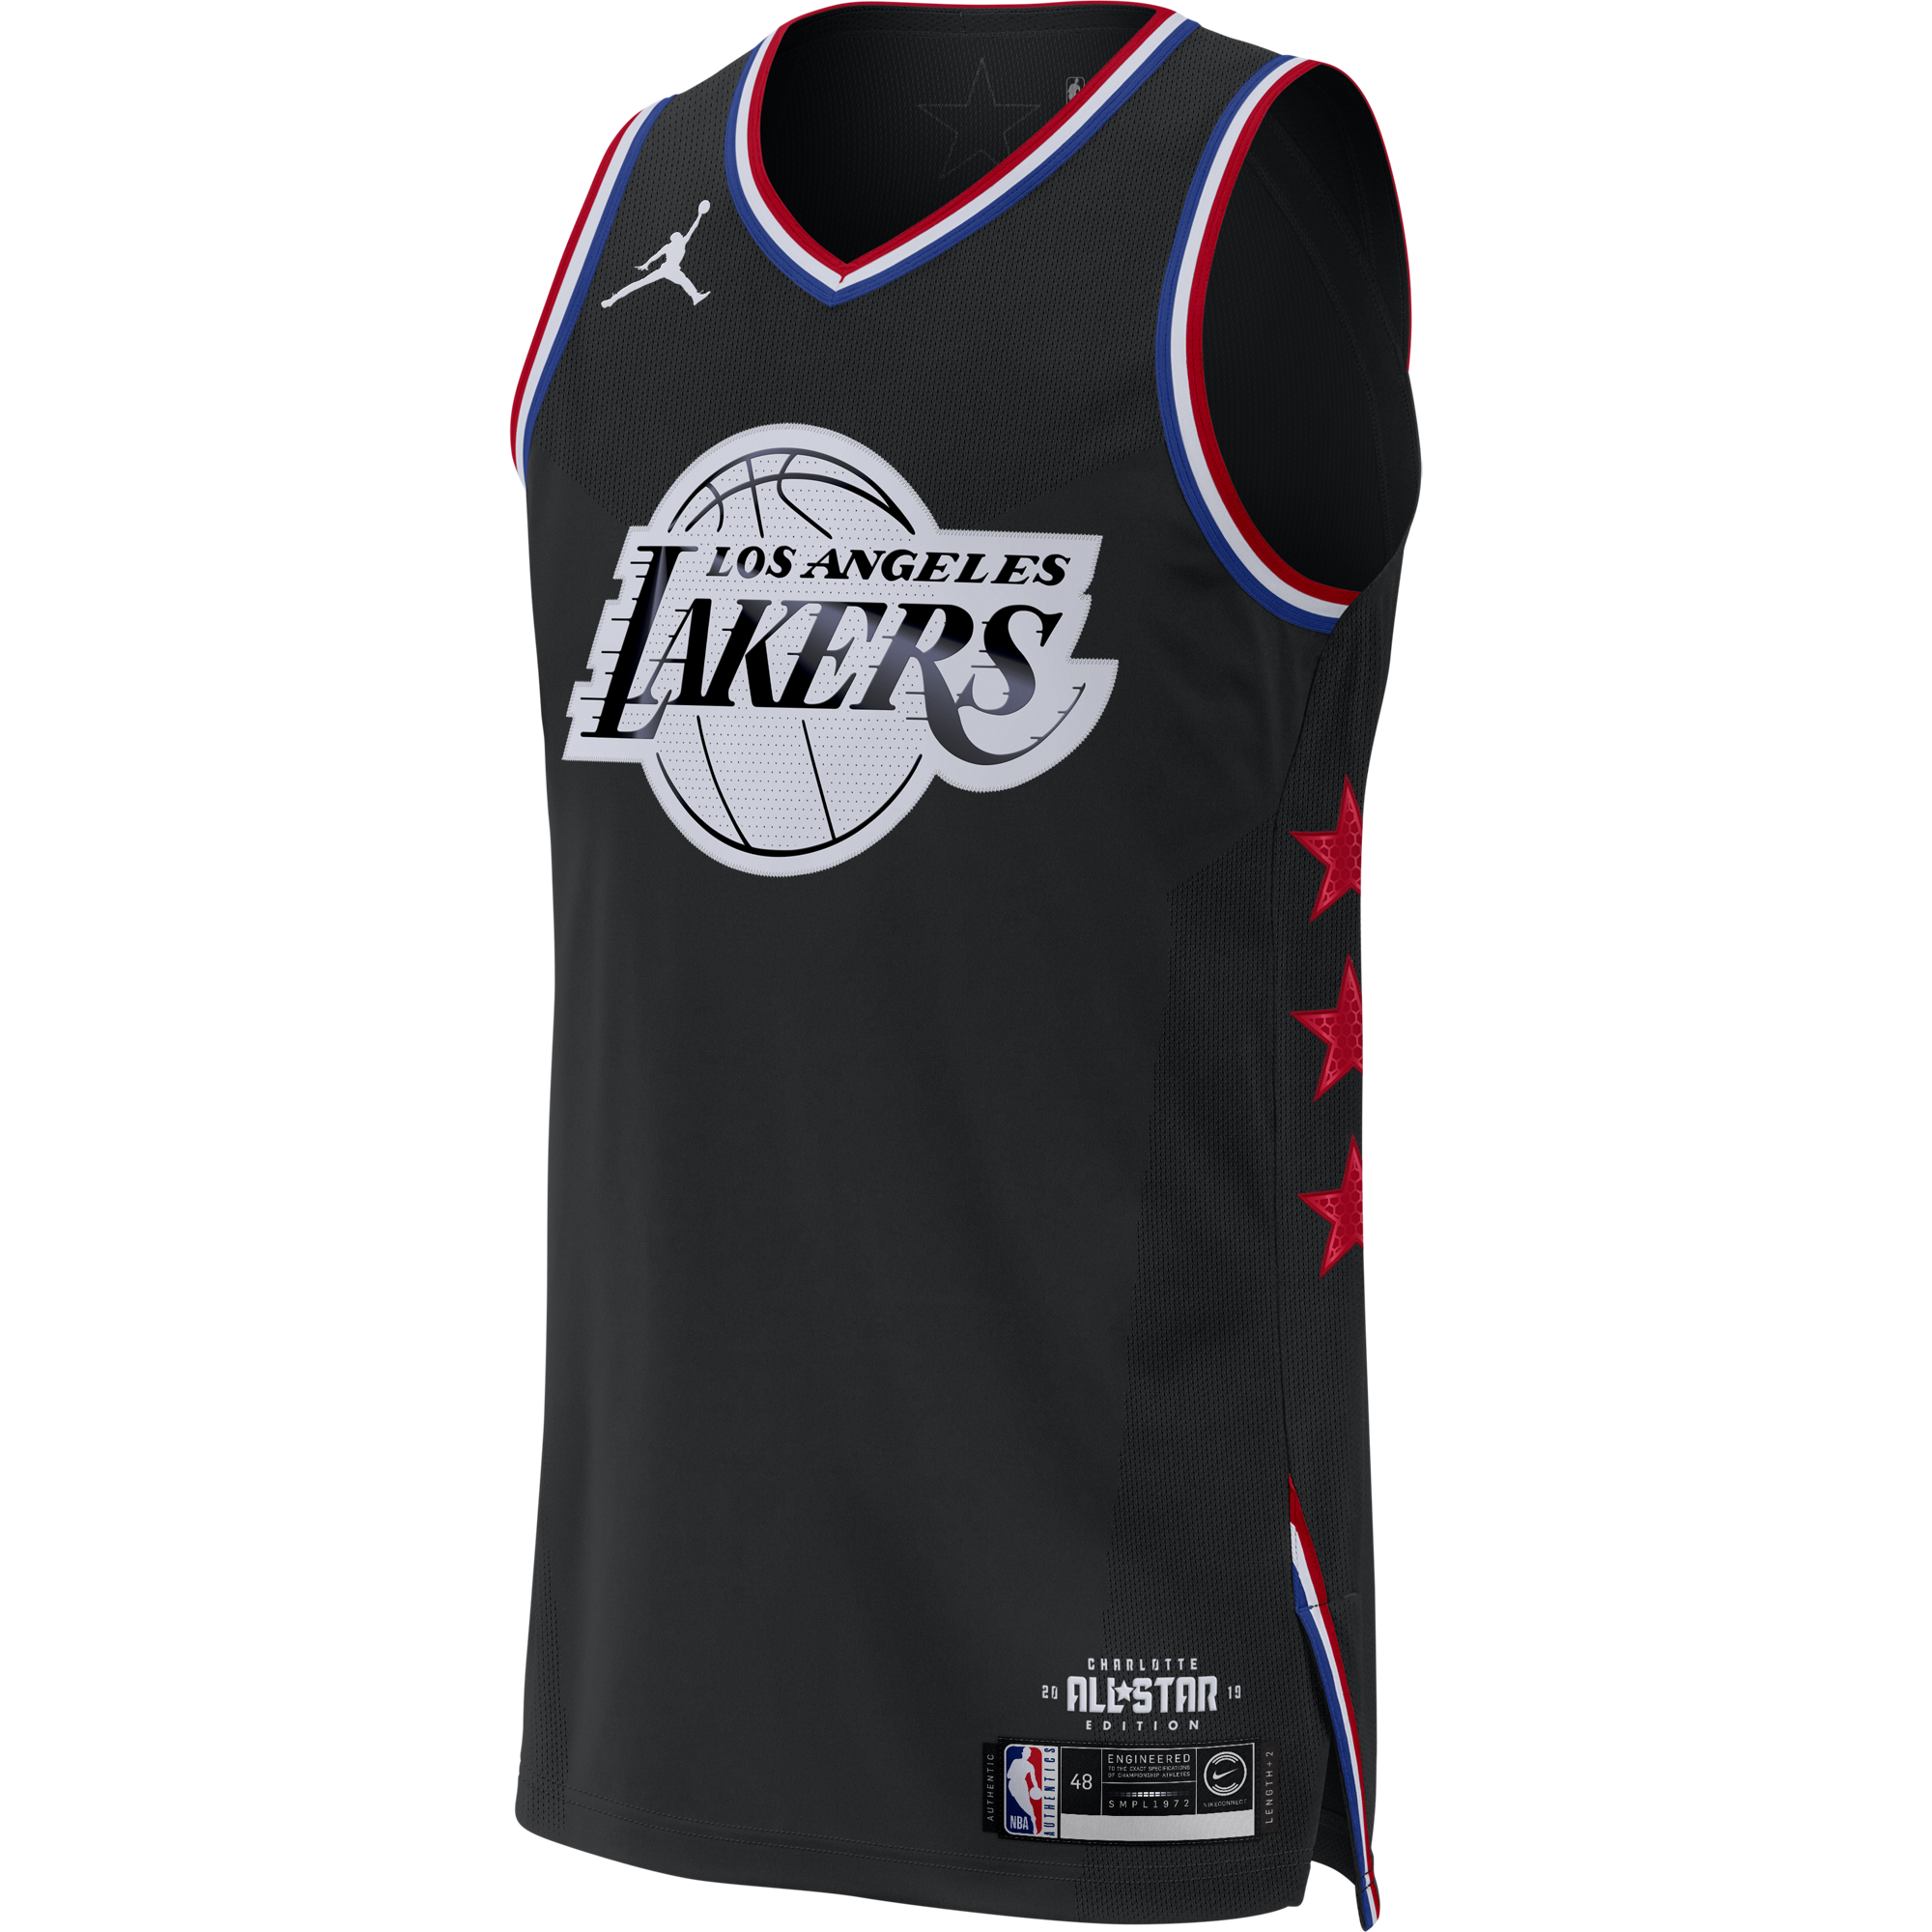 NIKE AIR JORDAN NBA ALL STAR WEEKEND 2019 LEBRON JAMES AUTHENTIC JERSEY BLACK